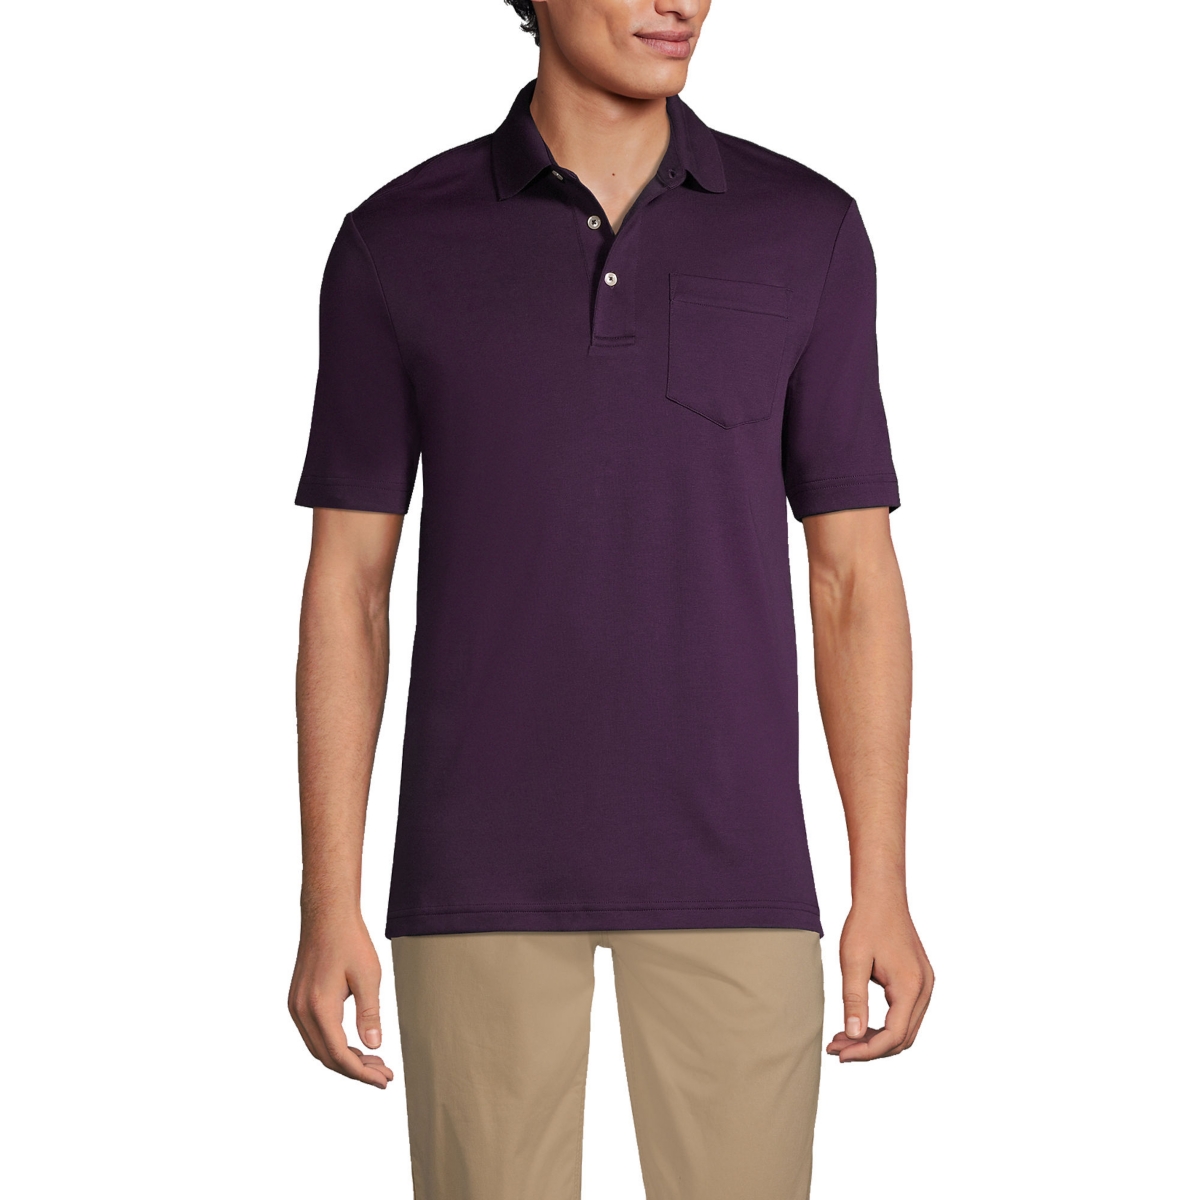 Men's Short Sleeve Cotton Supima Polo Shirt with Pocket - Blackberry